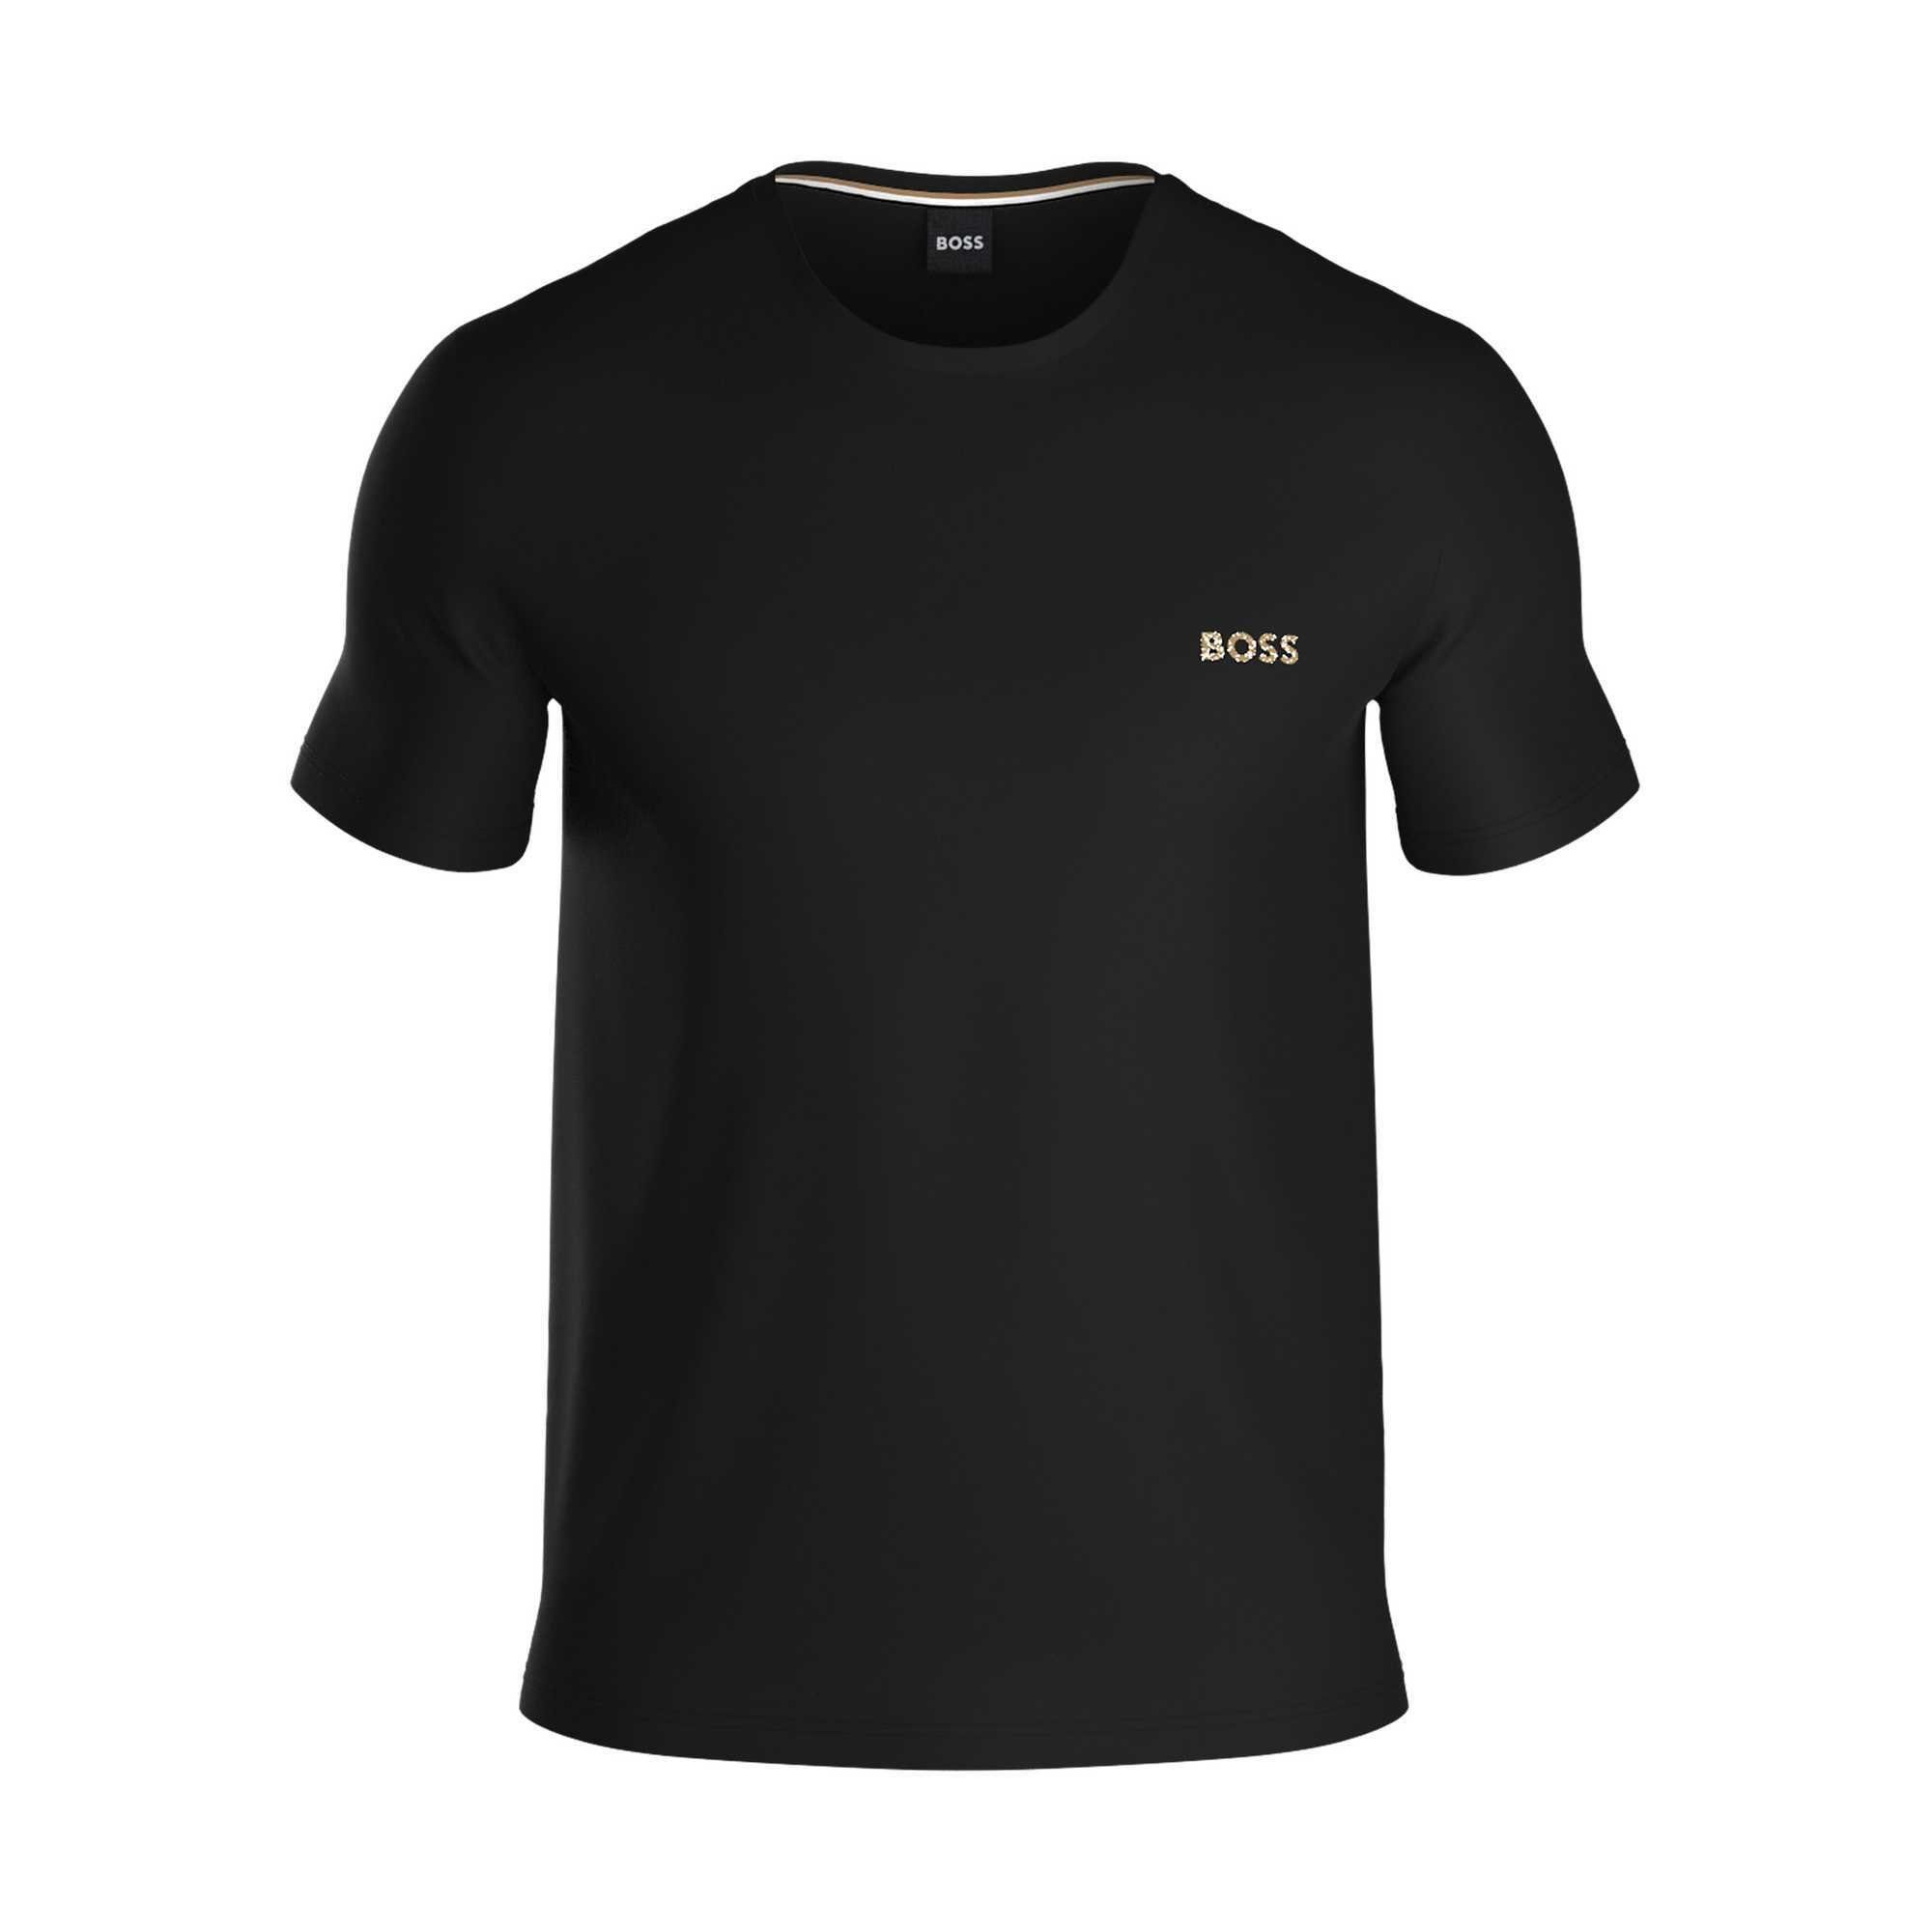 & BOSS Rundhals, Match, Baumwolle Mix Schwarz Herren - T-Shirt T-Shirt